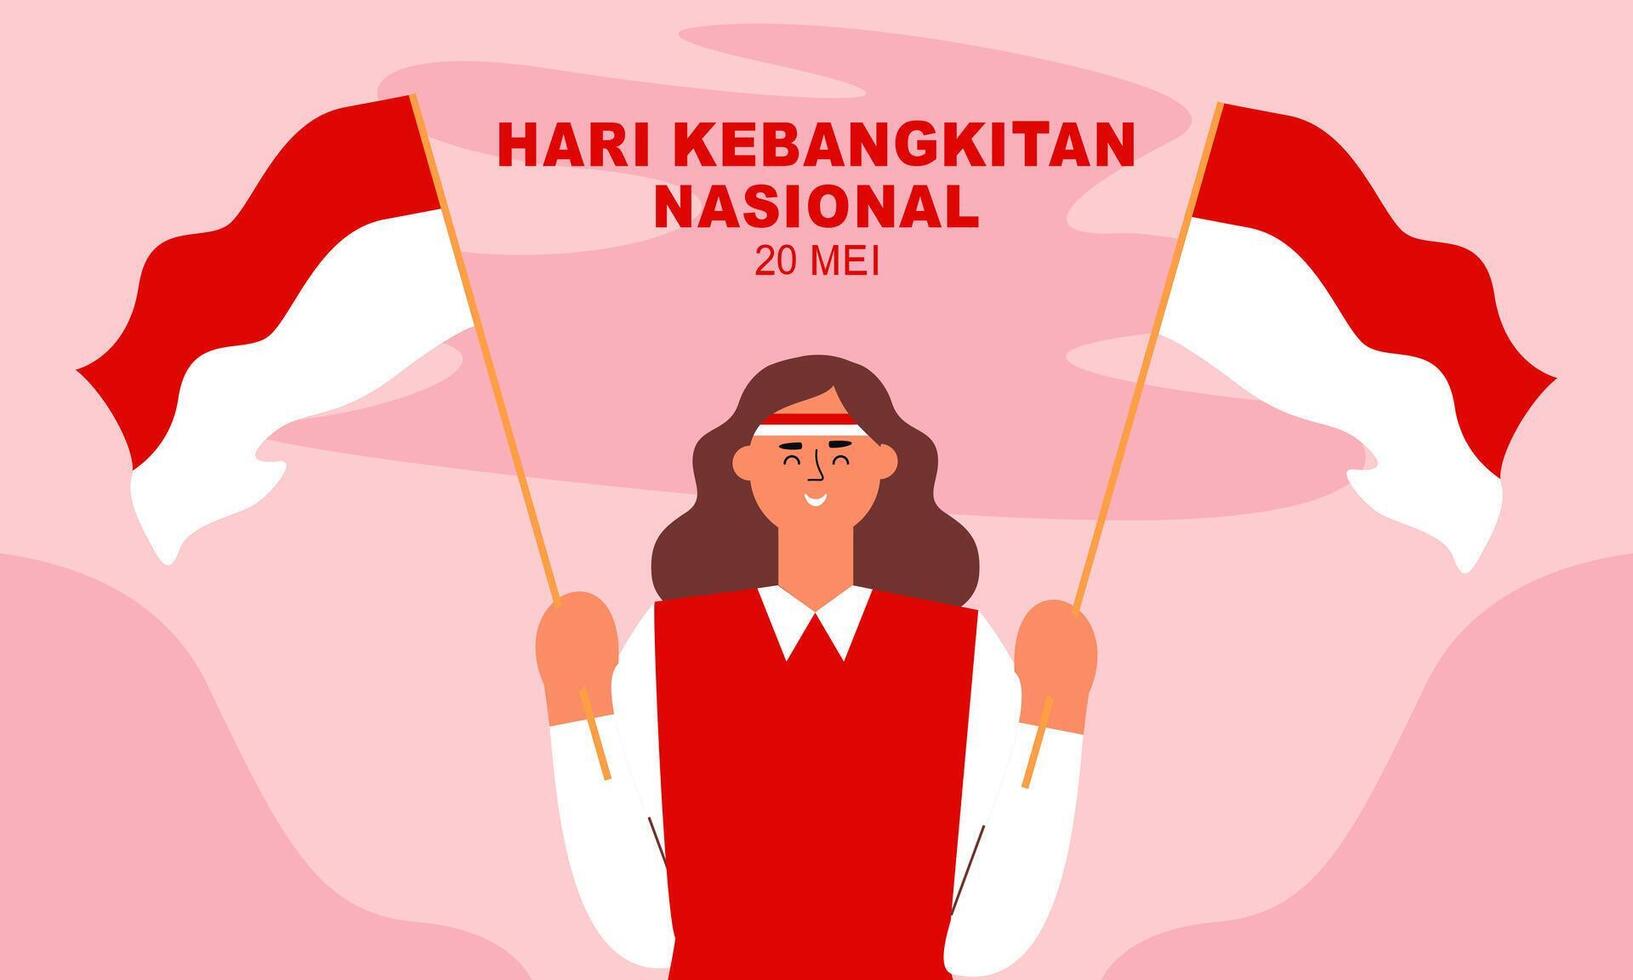 hari kebangkitan nasal 20 mei. Traducción mayo 20, nacional despertar día de Indonesia vector